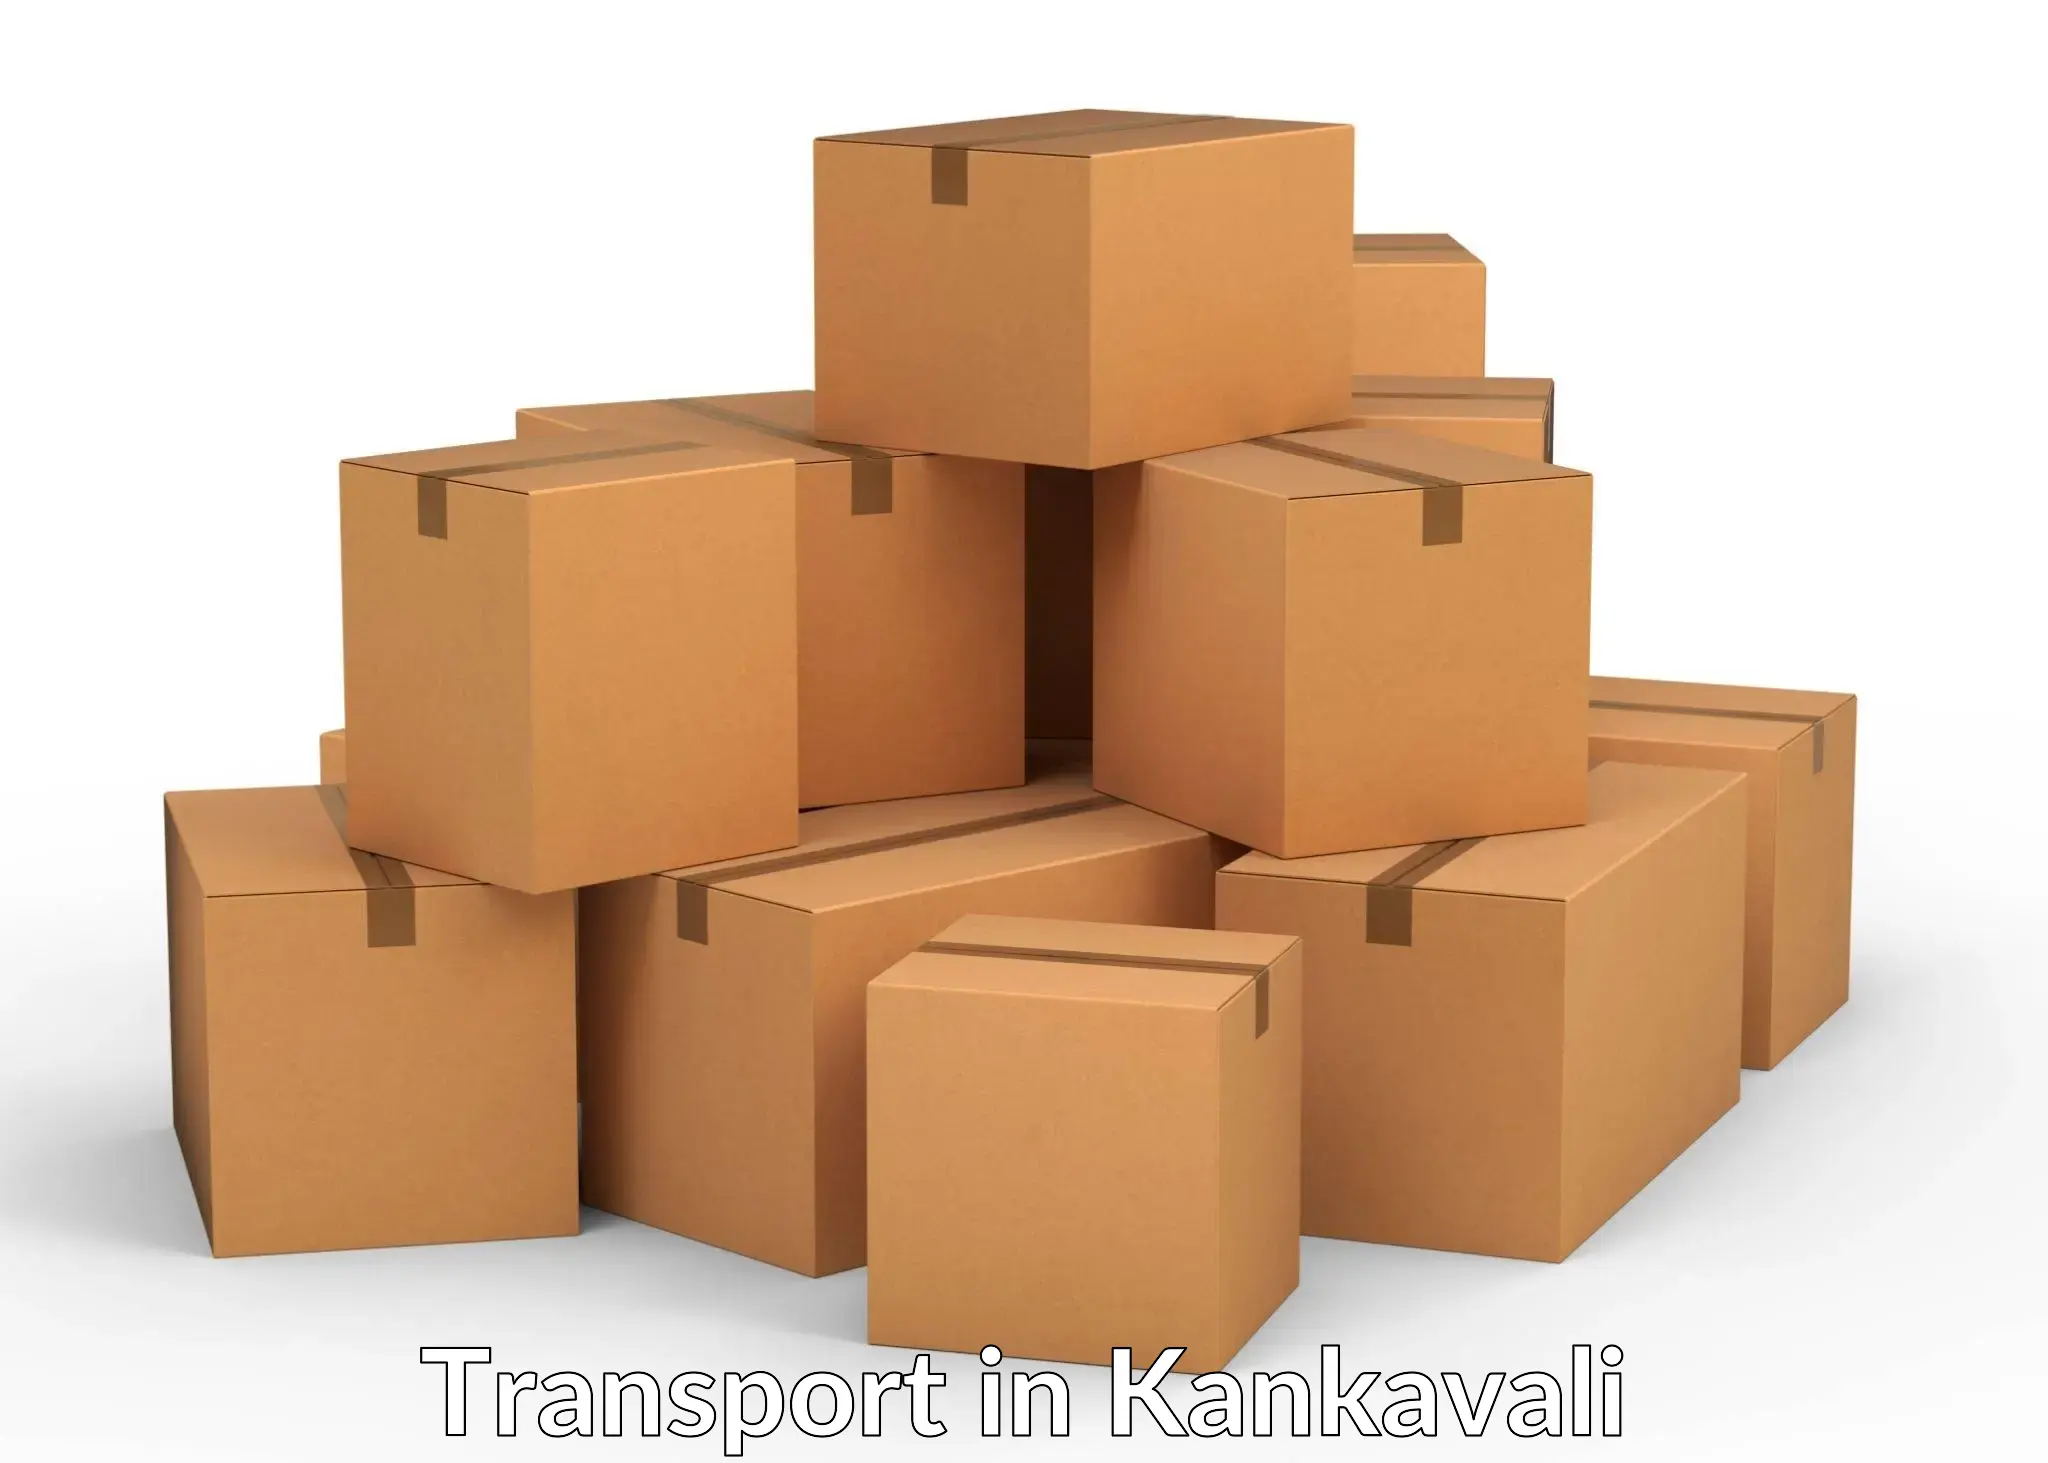 Interstate goods transport in Kankavali